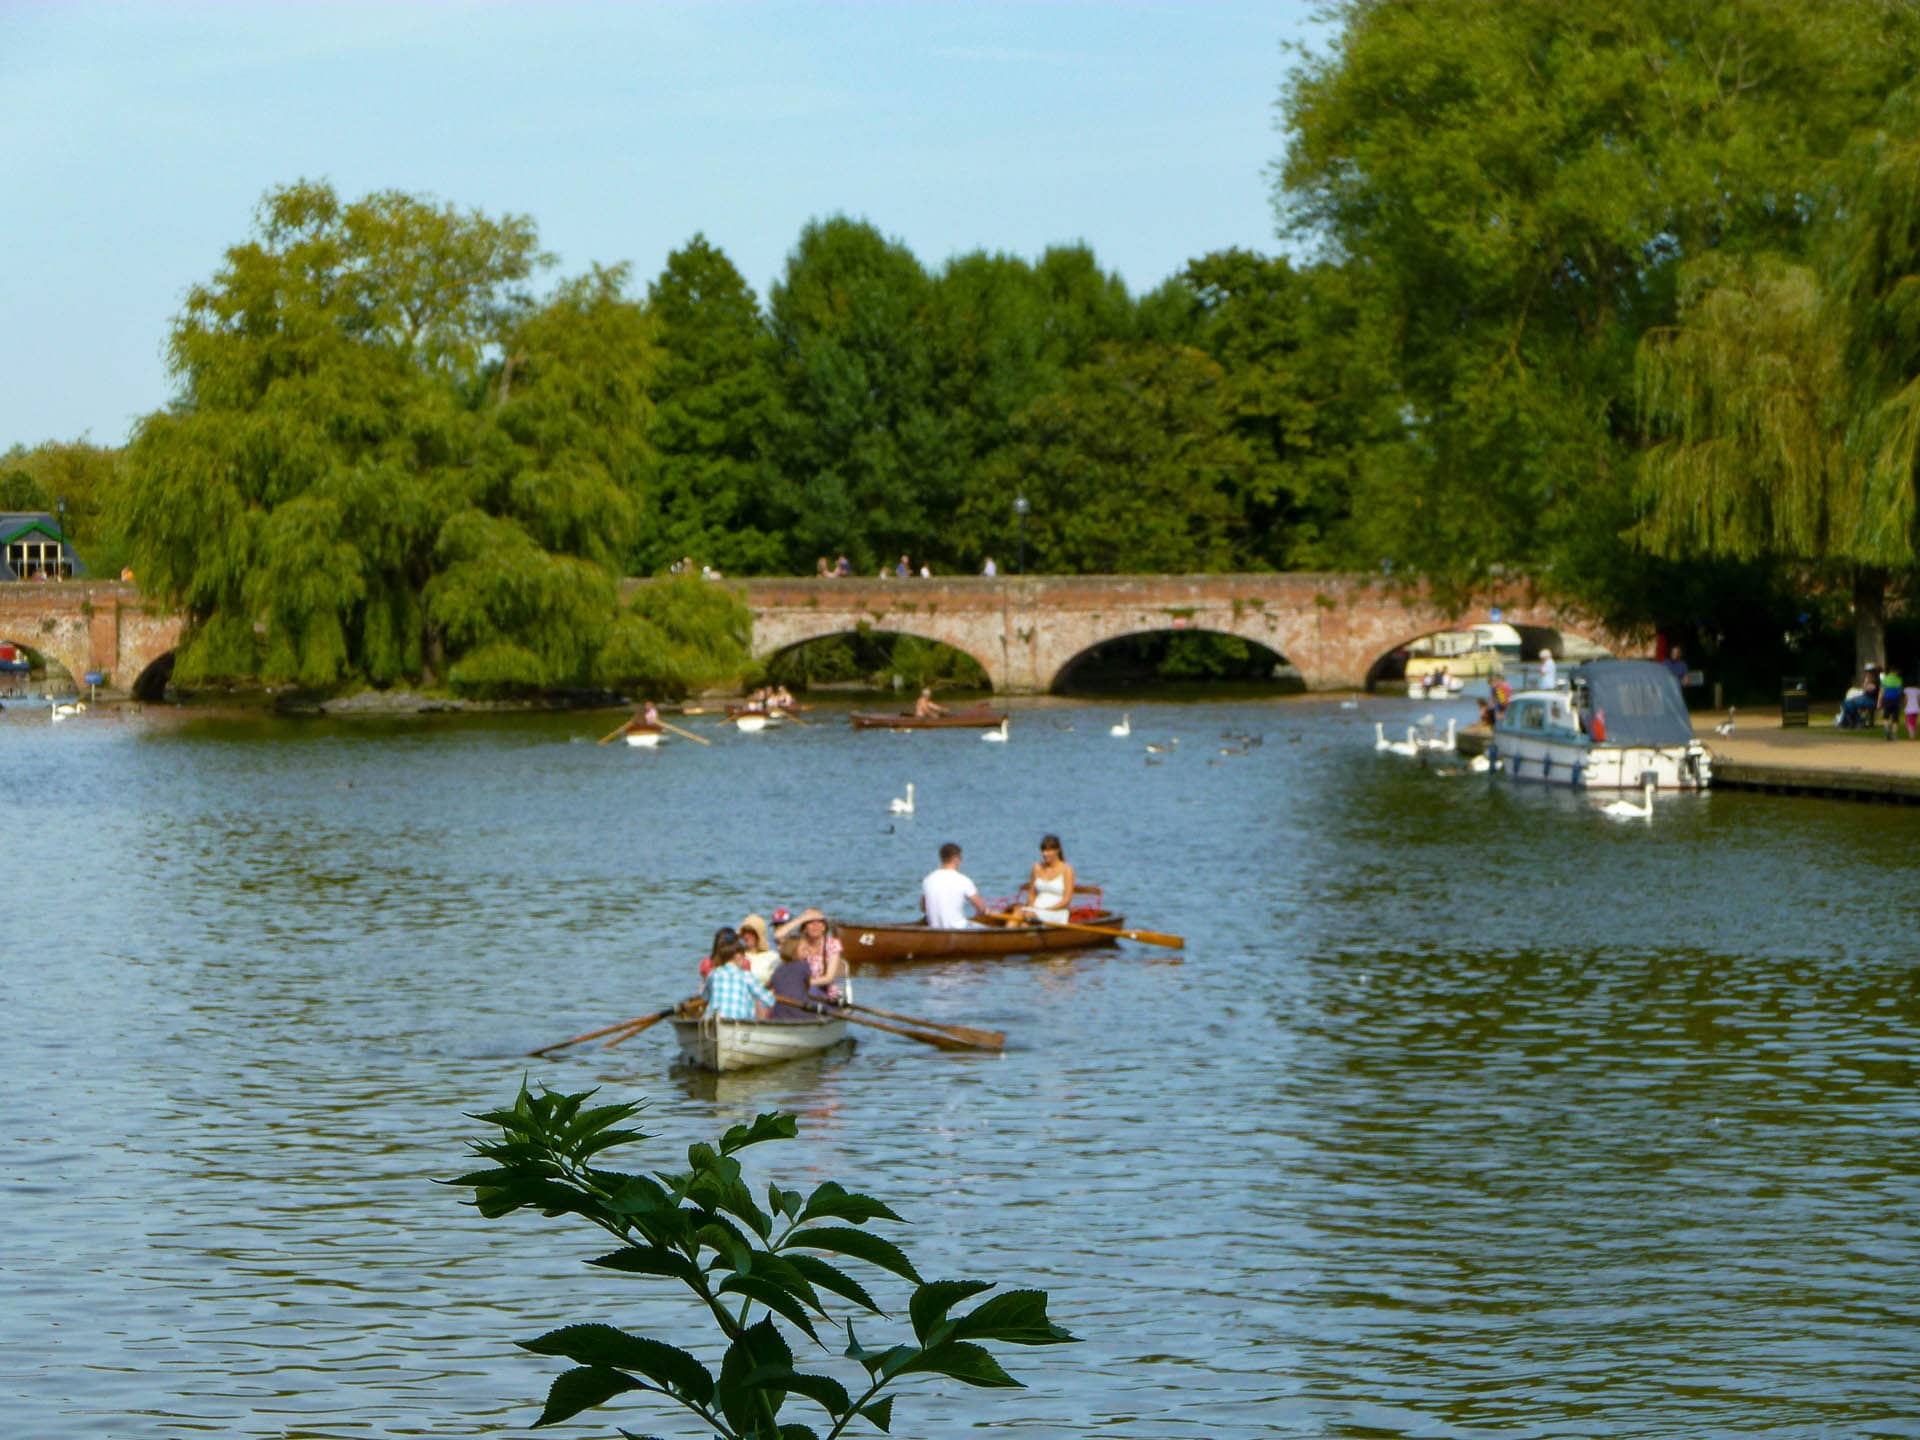 River Avon at Stratford